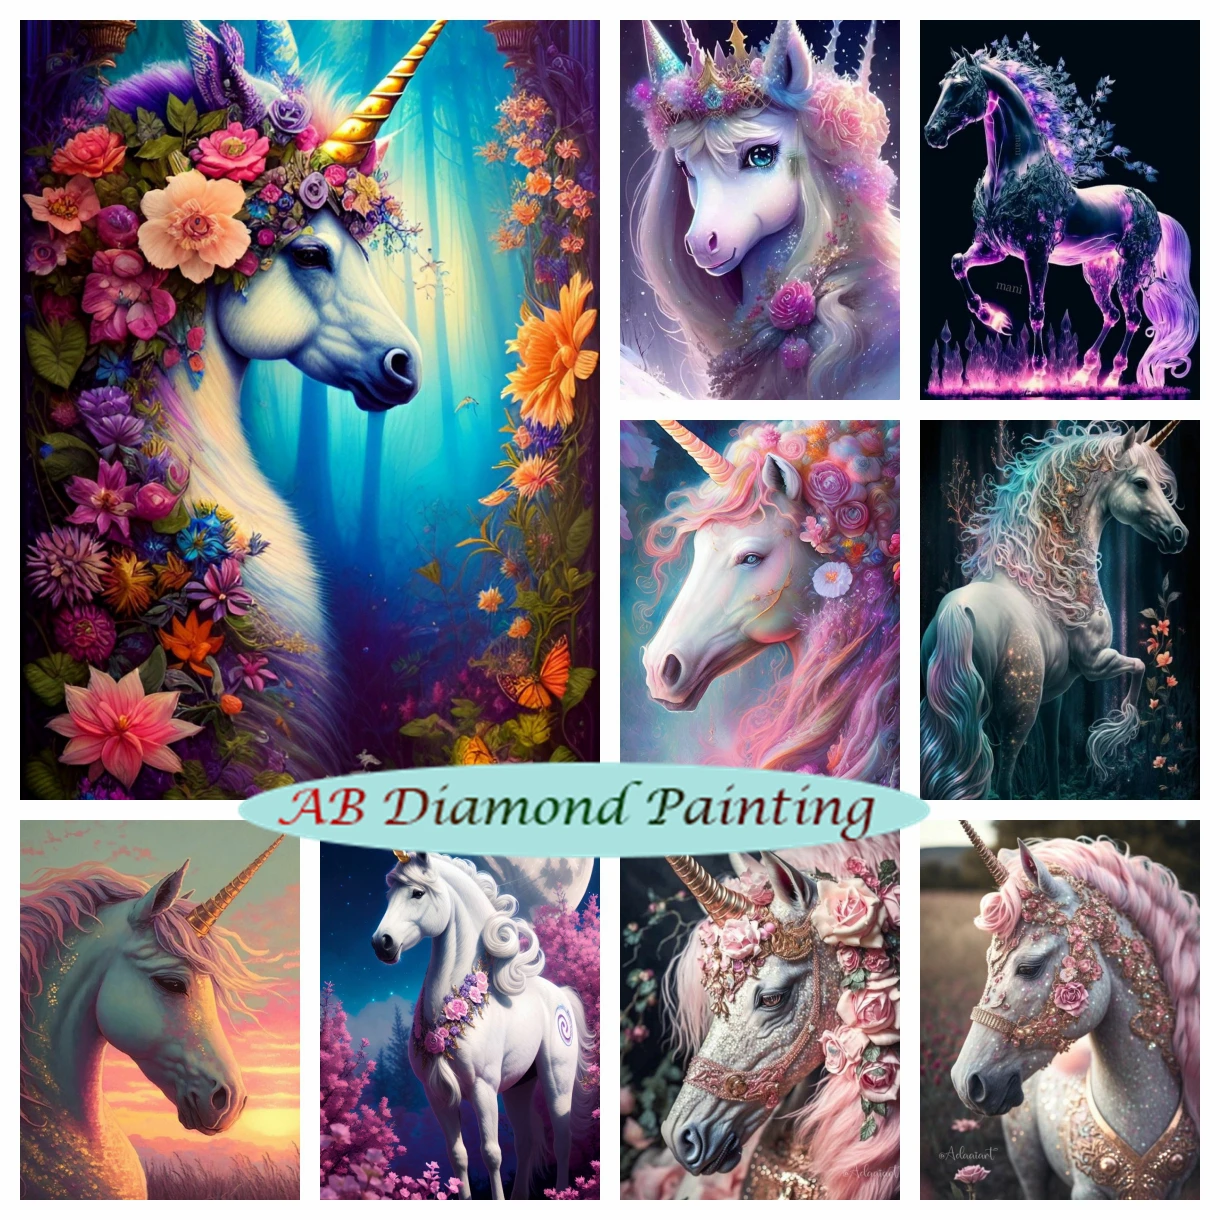 

Pink Horse Unicorn AB Diamond Painting Fantasy Animal Cross Stitch Kits Flower Rose Mosaic Embroidery Art Home Decor Craft Gift